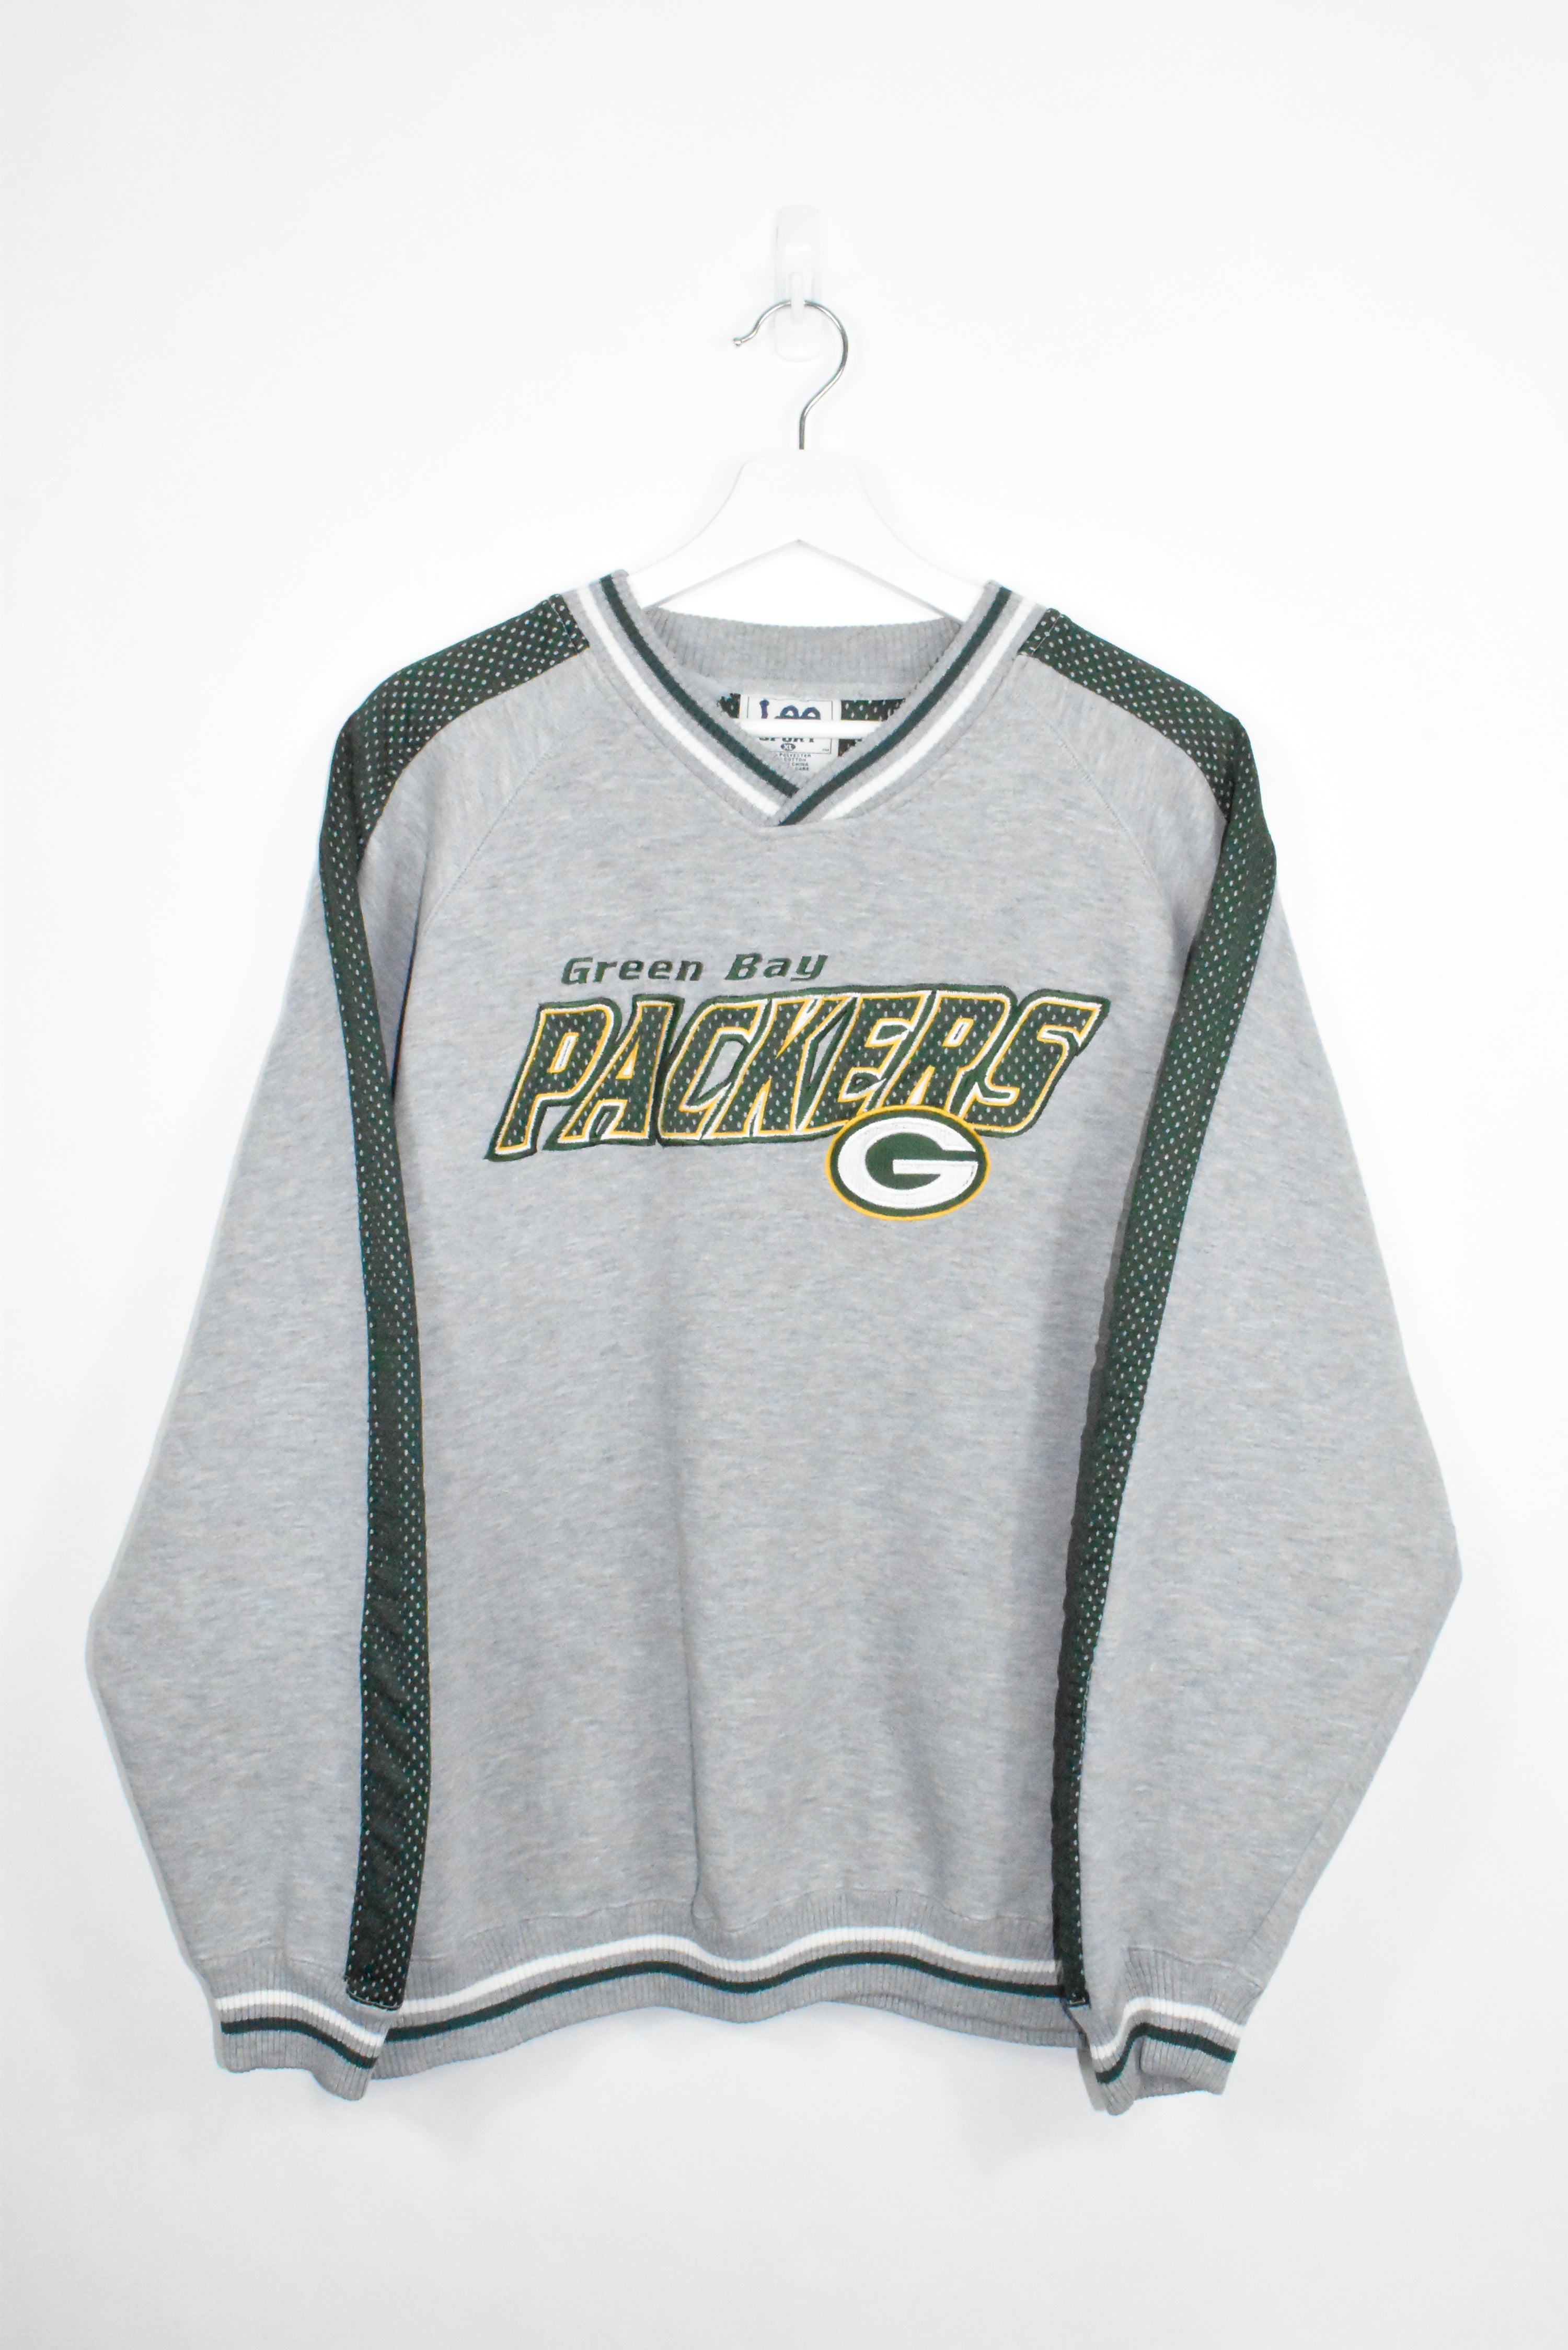 Vintage Lee Sport Packers Embroidery Sweatshirt XL - REVIVED Vintage est. 2020